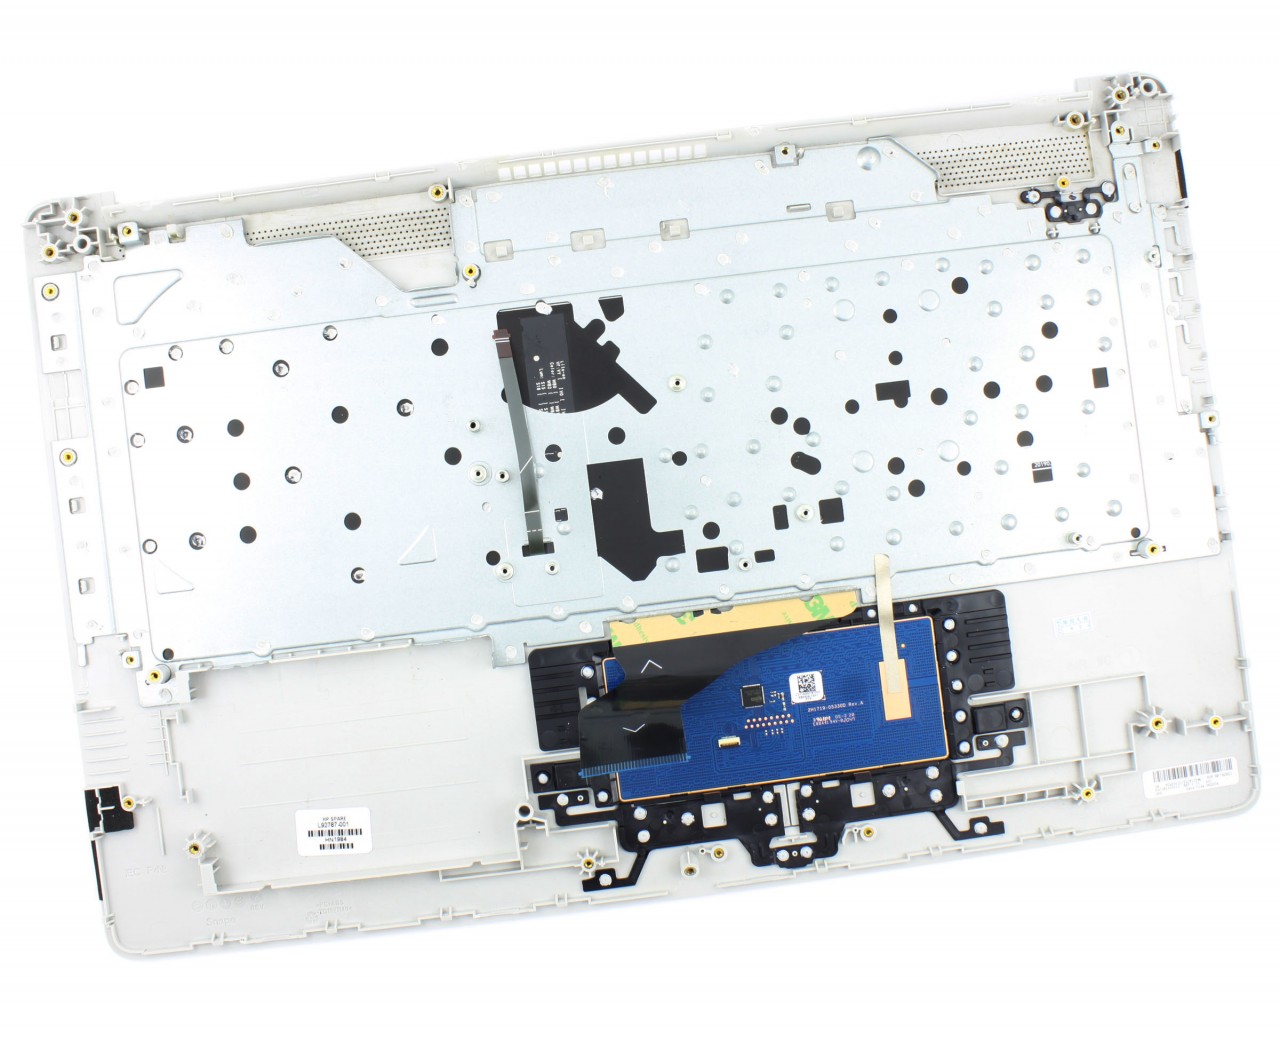 Tastatura HP L22750-00 Argintie cu Palmrest Argintiu si TouchPad iluminata backlit argintie